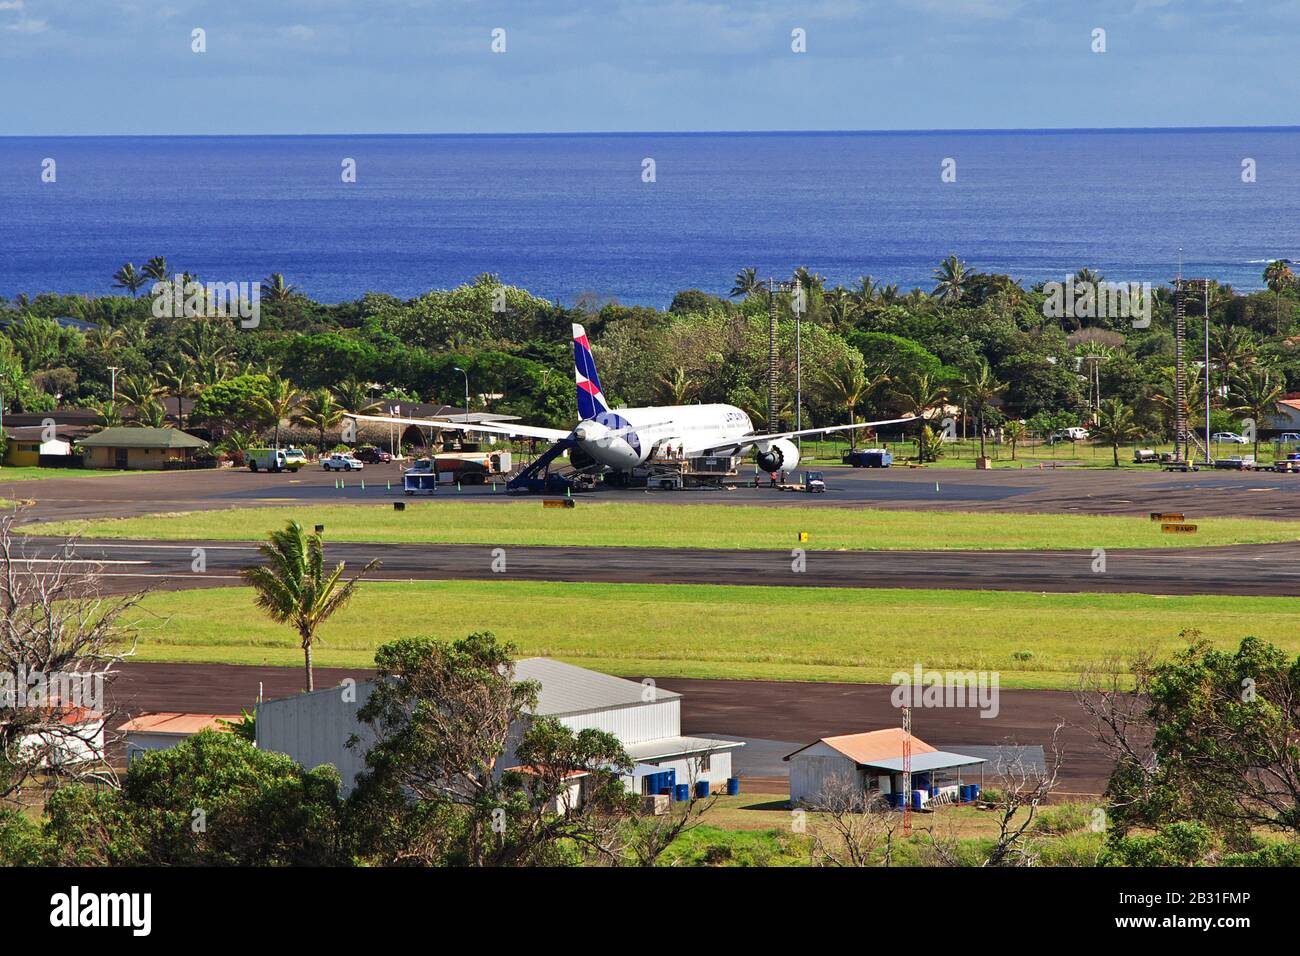 Hanga Roa, Isola di Pasqua / Cile - 28 dic 2019: Compagnie aeree LATAM nell'aeroporto Hanga Roa su Rapa Nui, Isola di Pasqua, Cile Foto Stock